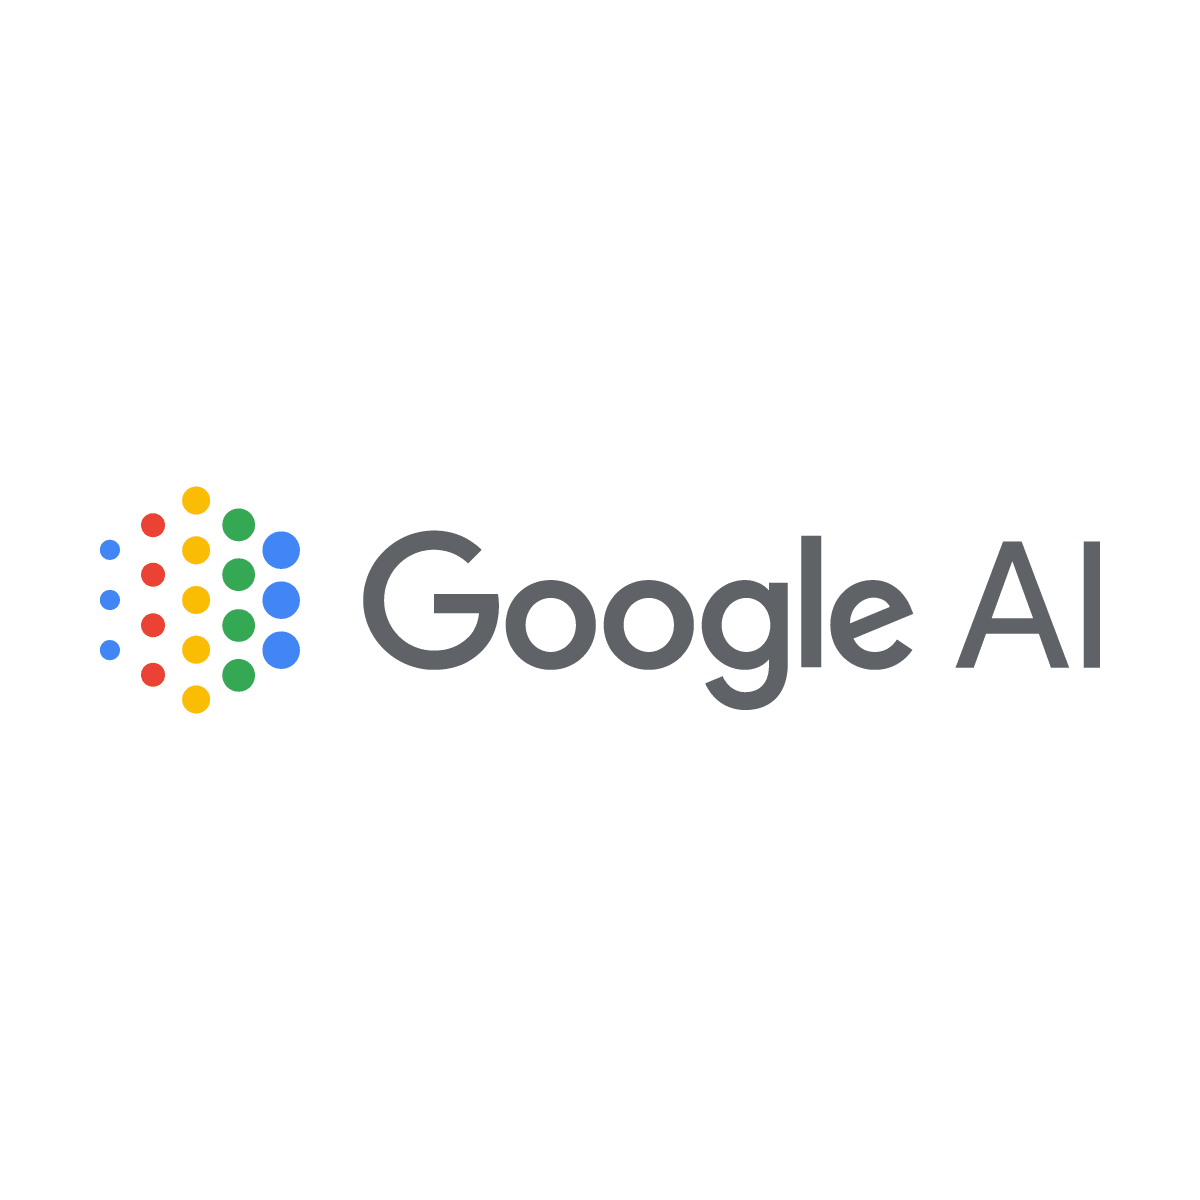 Google AI Blog